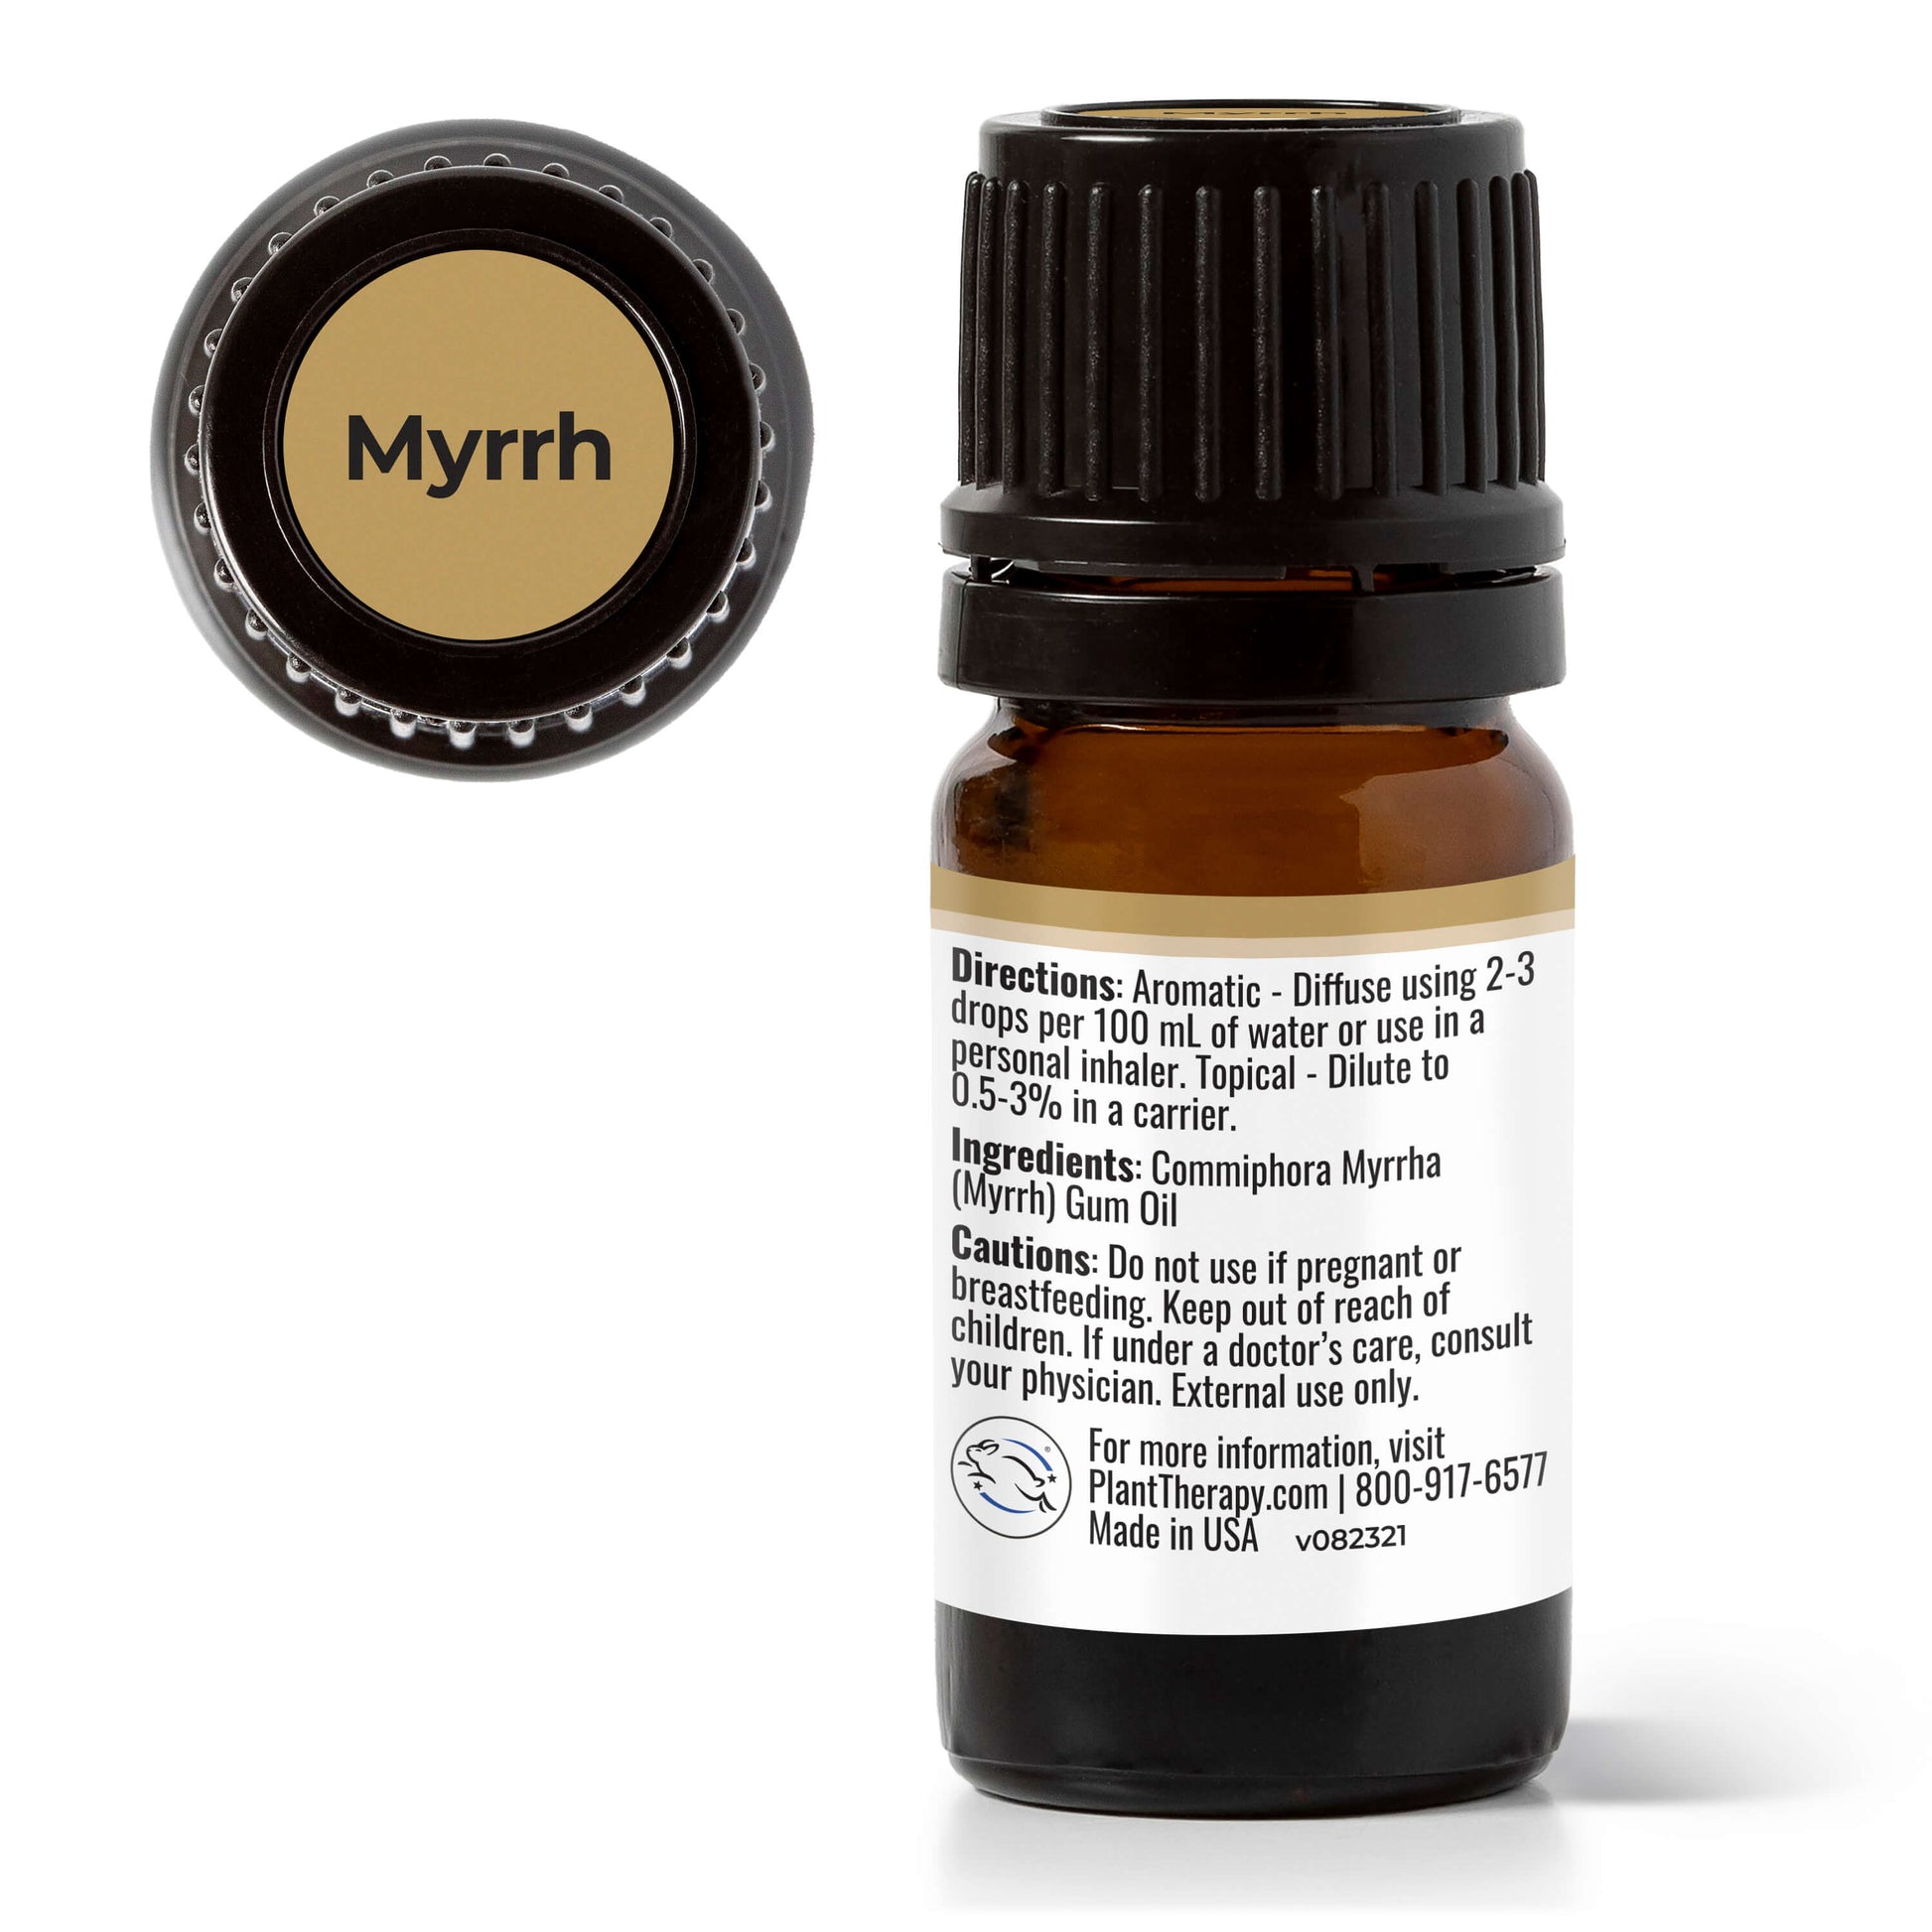 Myrrh Essential Oil (10ml)